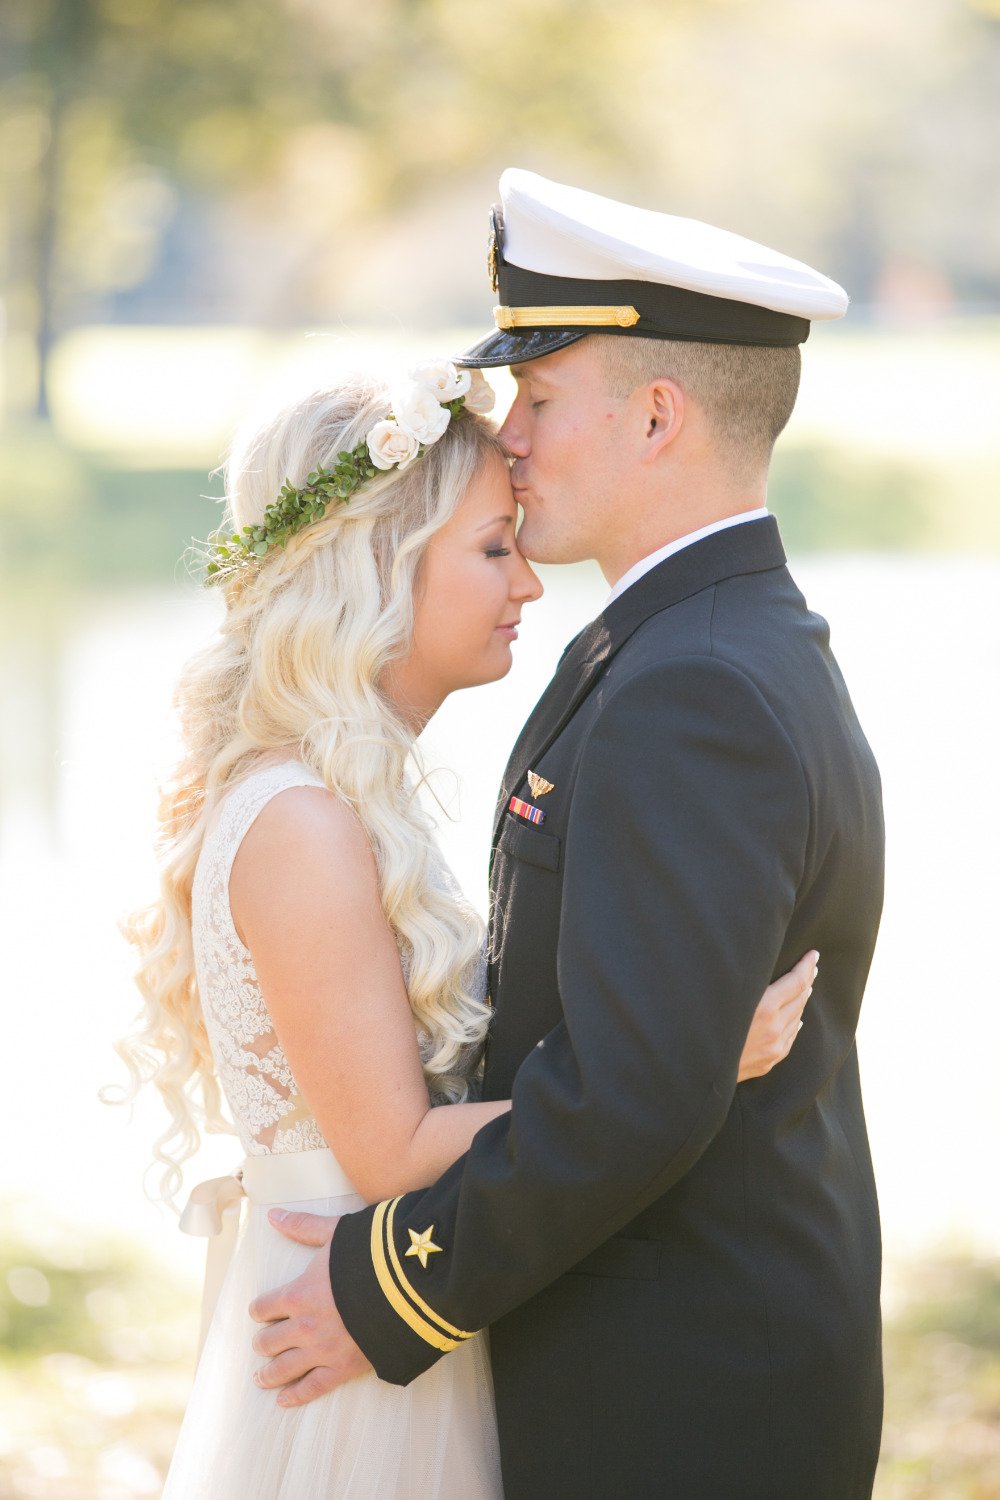 cute wedding kiss with groom in Navy uniform